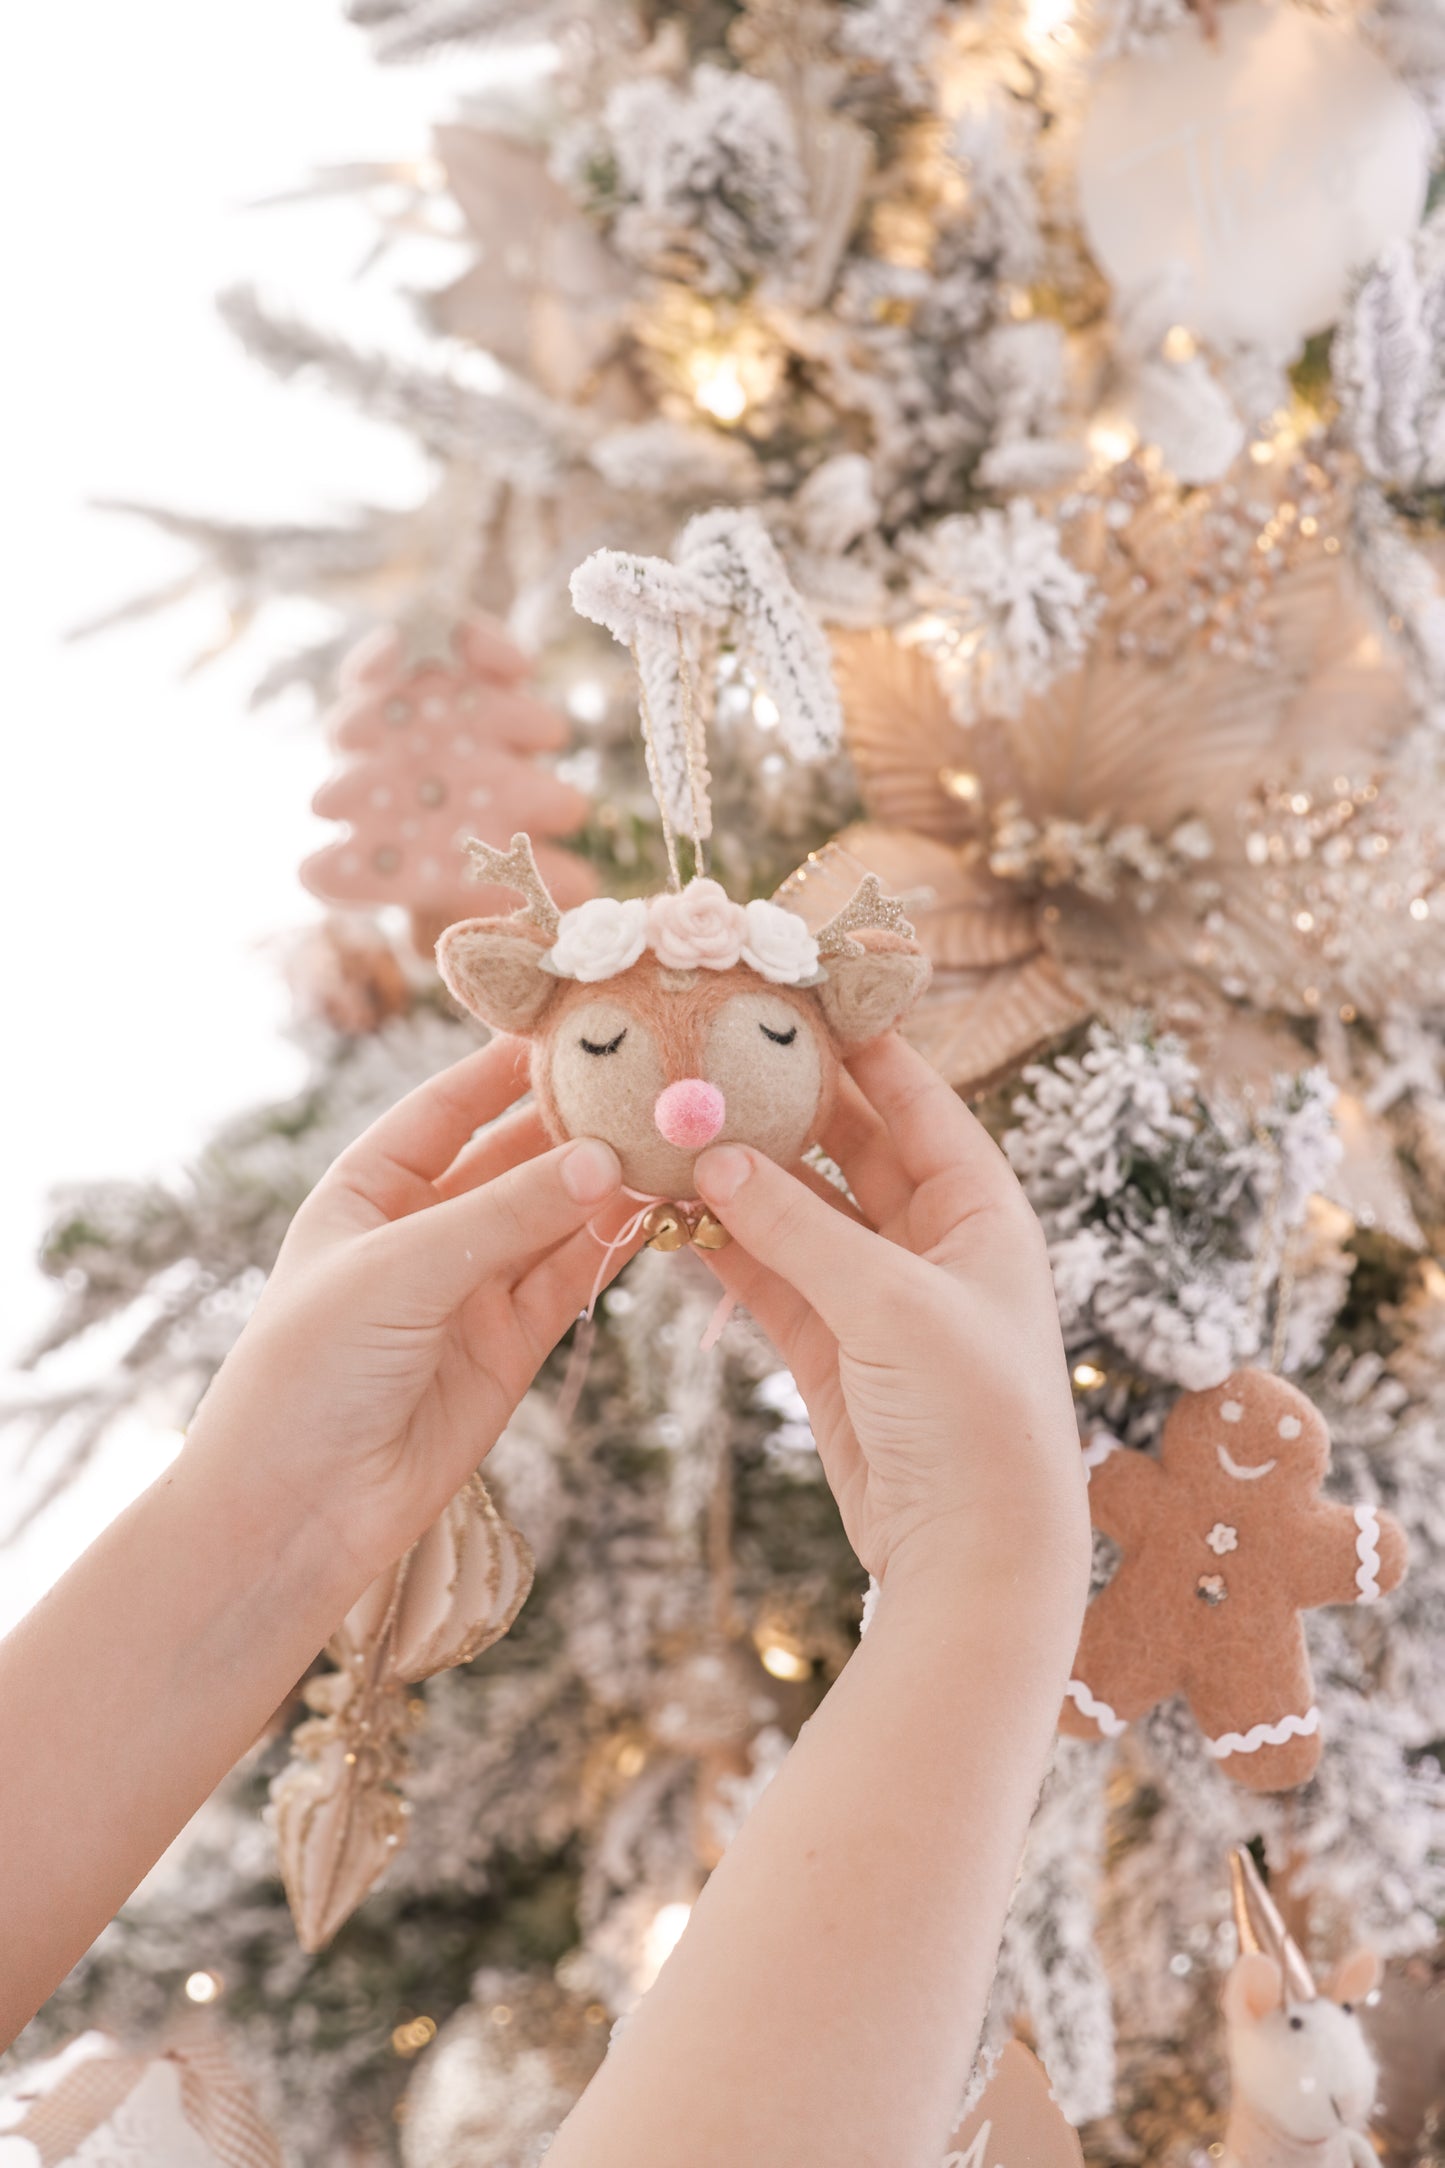 Reindeer Christmas Ornament - Pink Nose